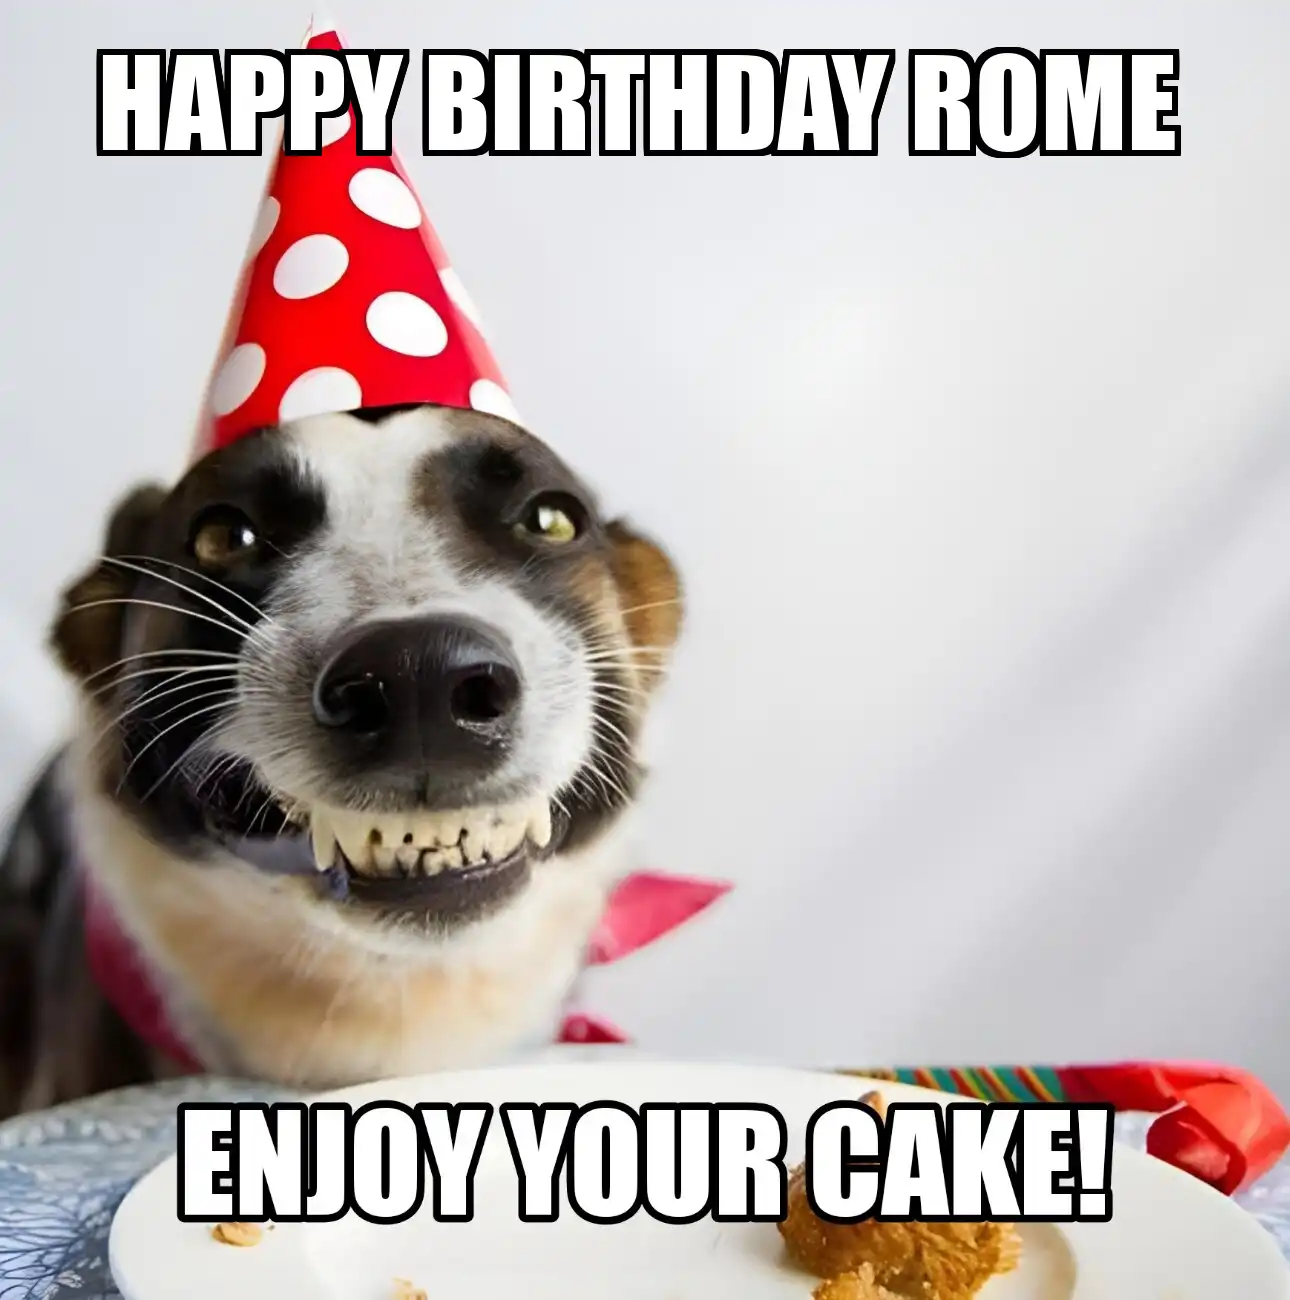 Happy Birthday Rome Enjoy Your Cake Dog Meme